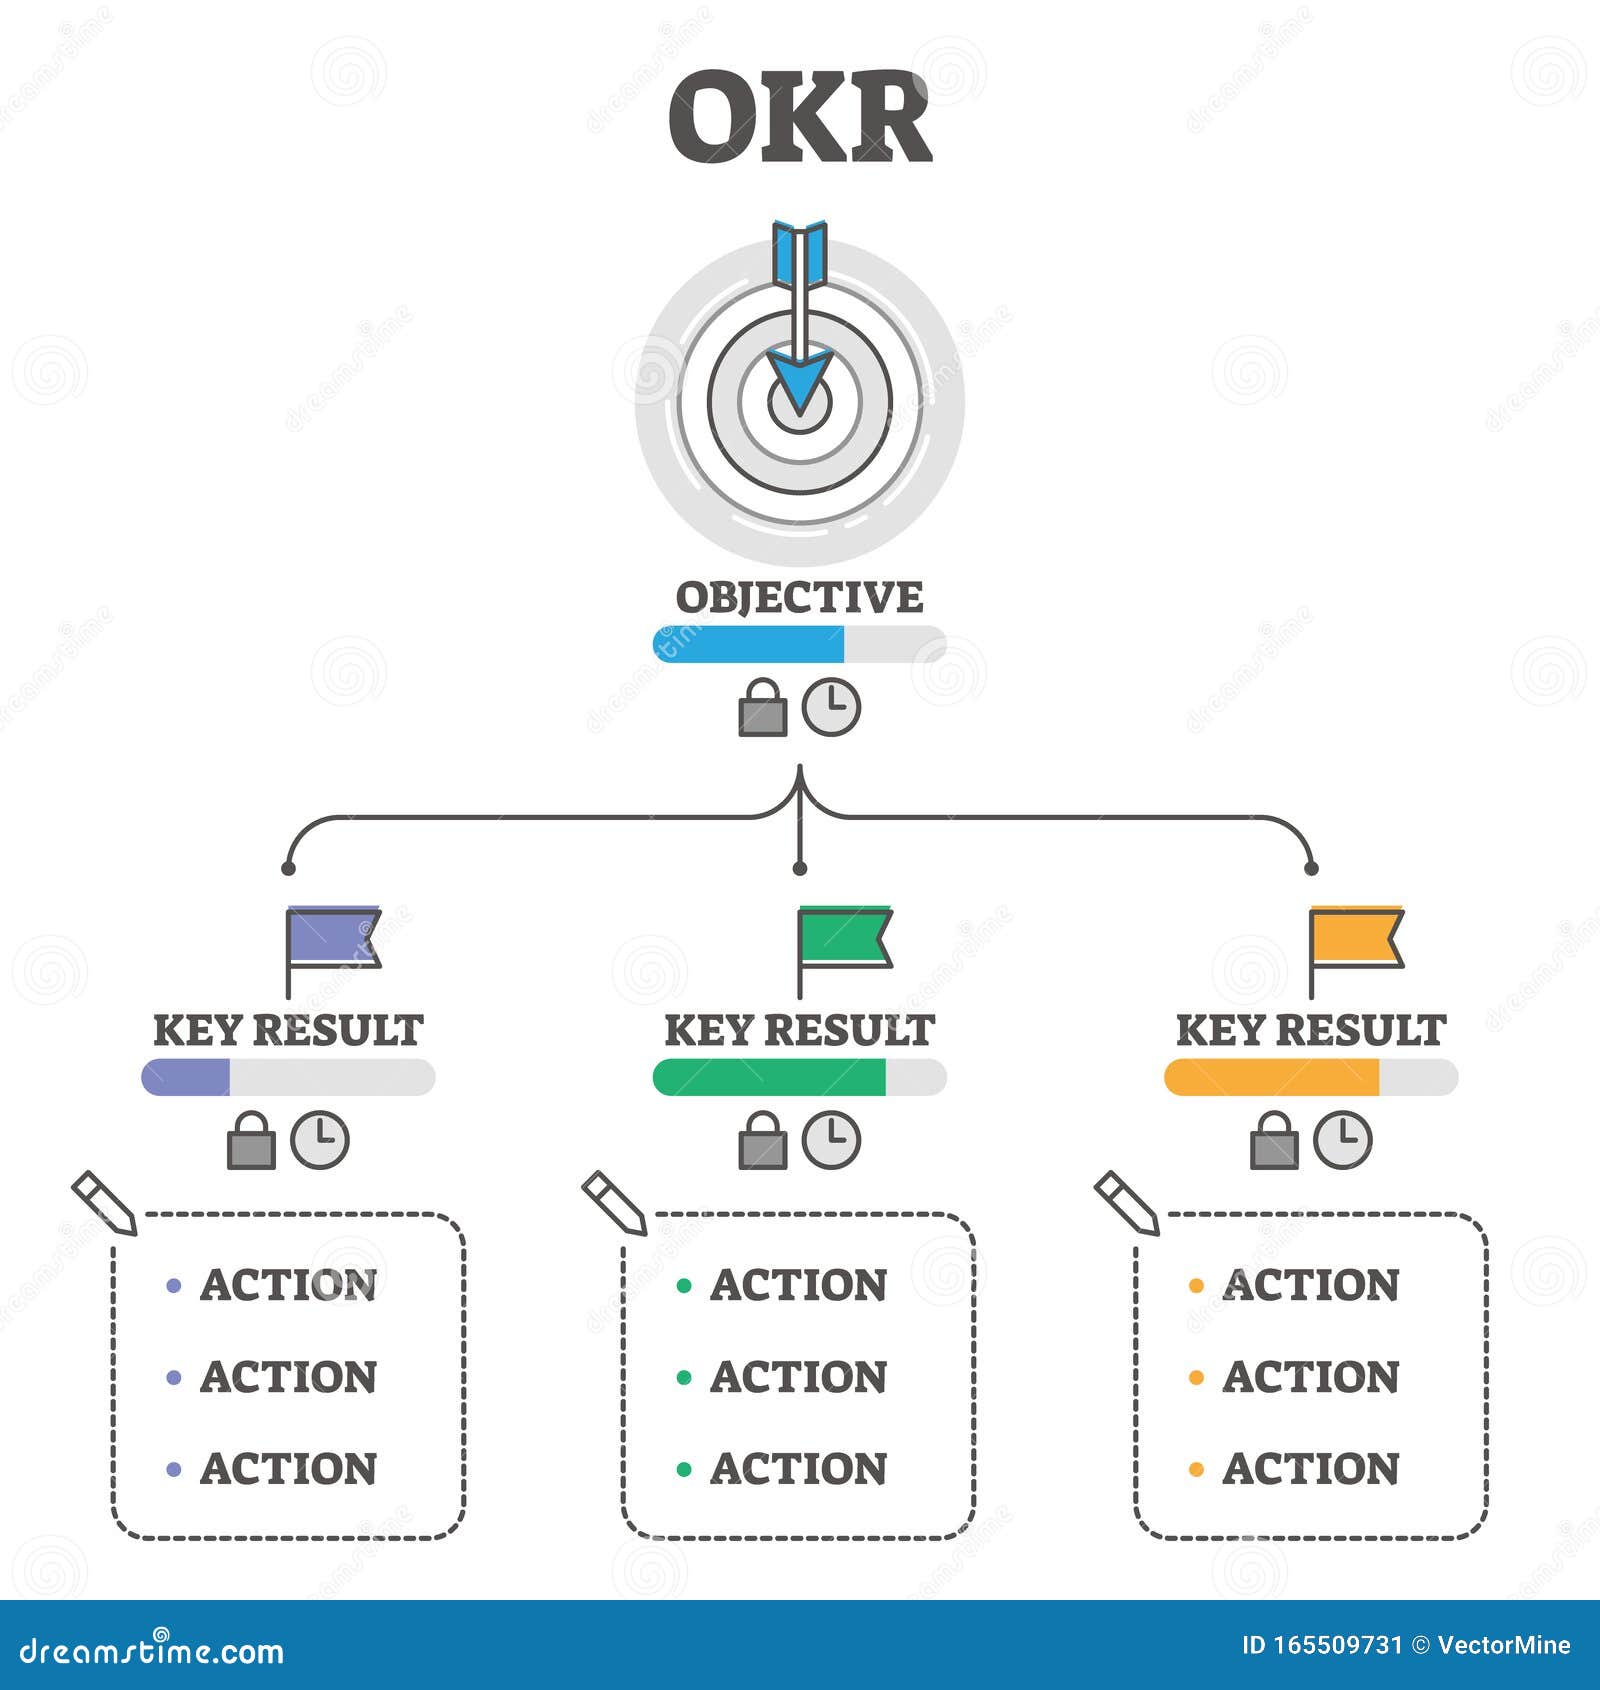 OKR Vector, Objectives And Key Results | CartoonDealer.com #192126221